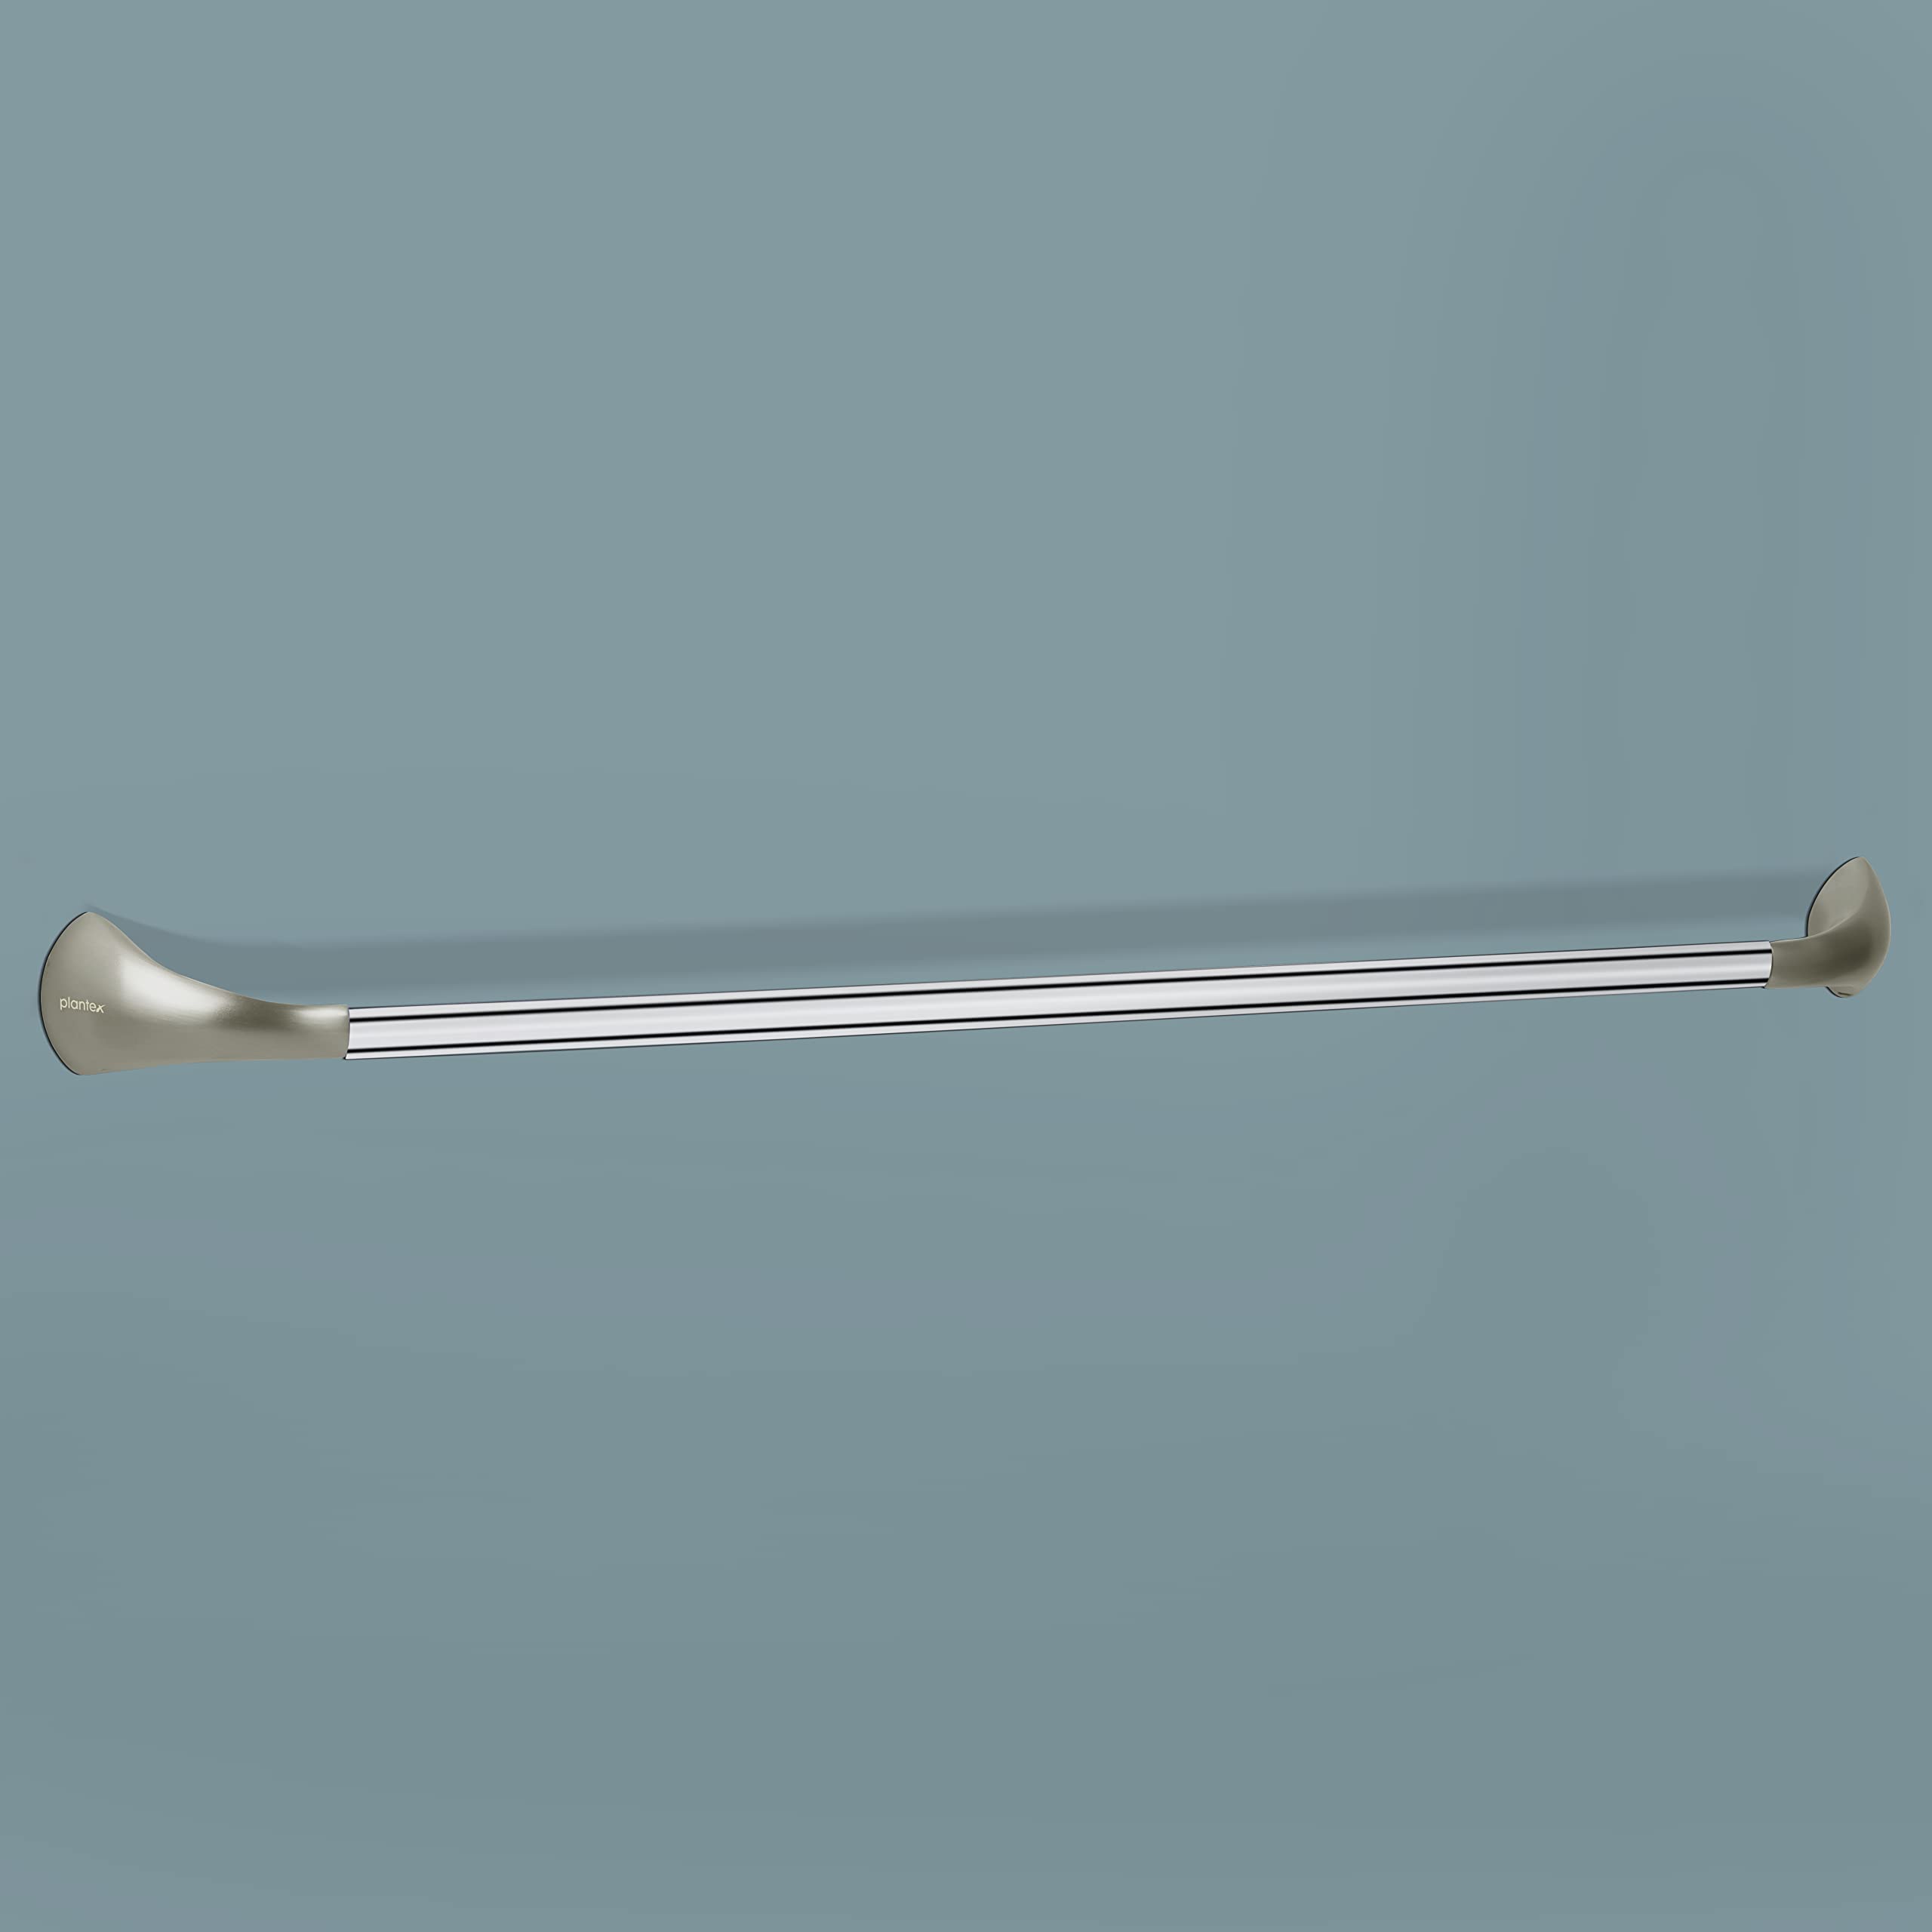 Plantex Fully Brass Smero Towel Rod for Bathroom/Towel Stand/Hanger/Bathroom Accessories - 24 Inch,Chrome/Satin (EF-4132-B)